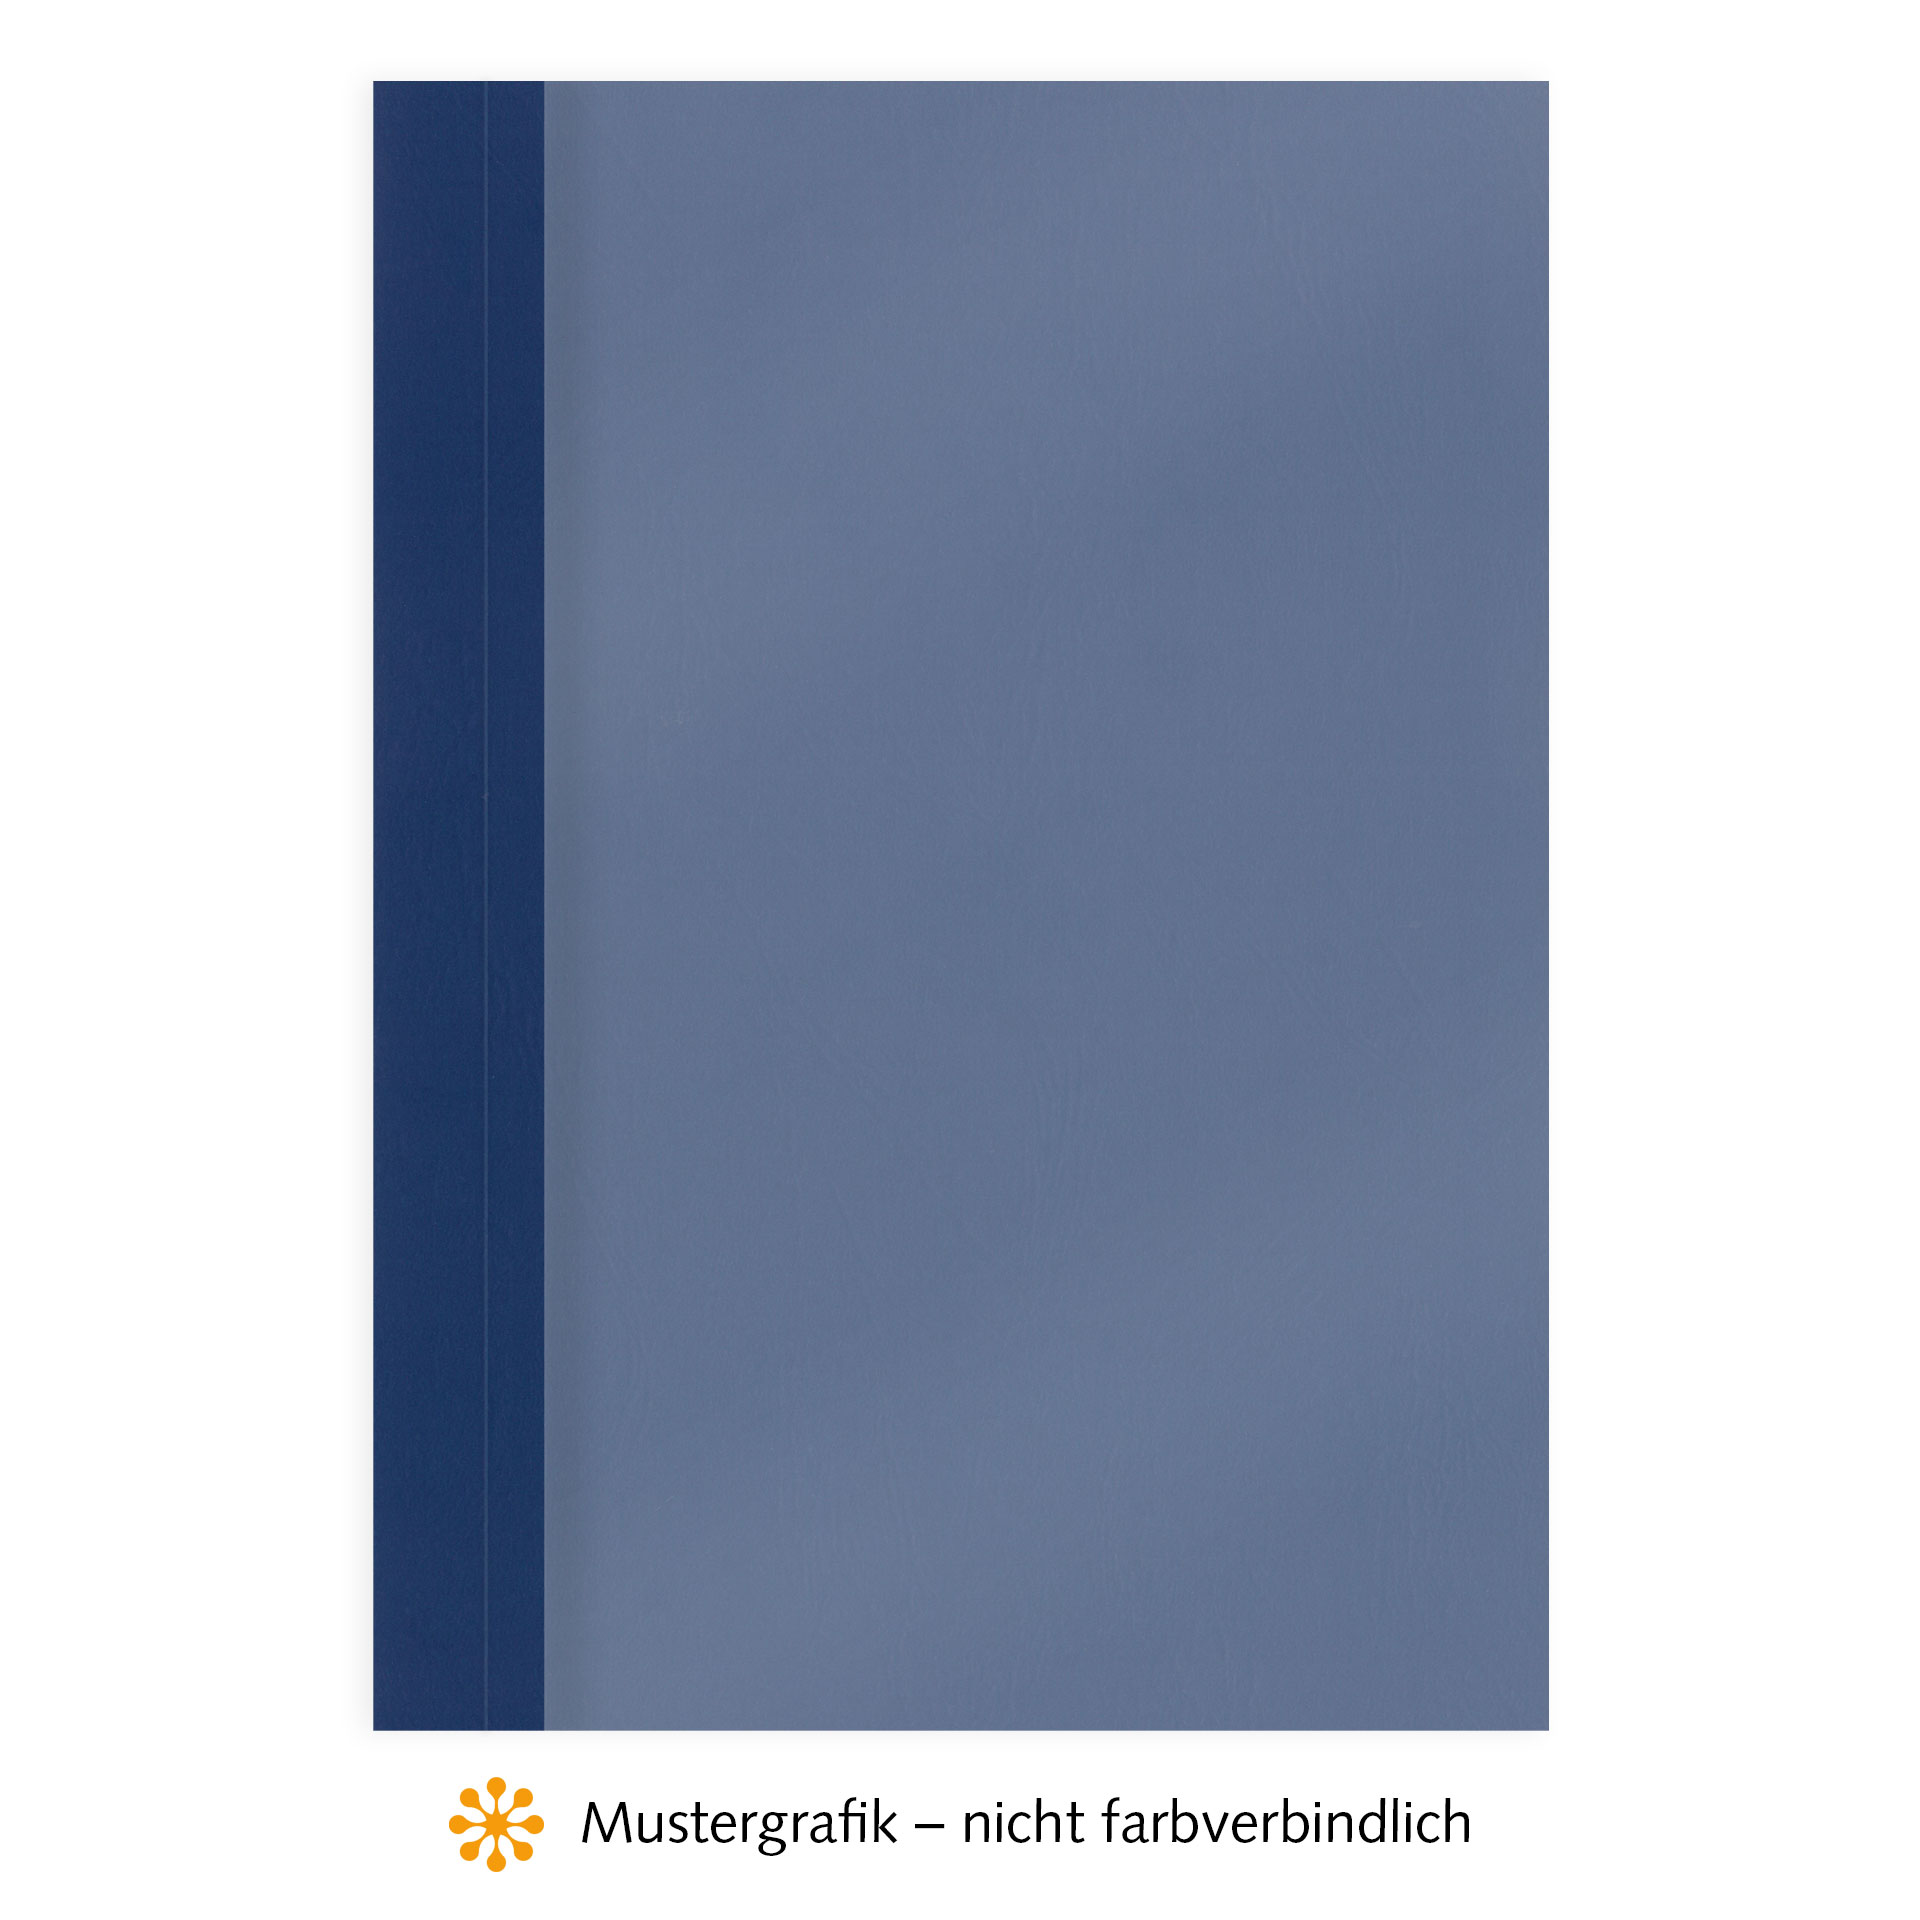 Ösenmappen DUO Cover, Vorderseite Folie MATT transparent, Rückseite Karton Leder, Dunkelblau / Royalblau, 10 mm, 91 bis 100 Blatt